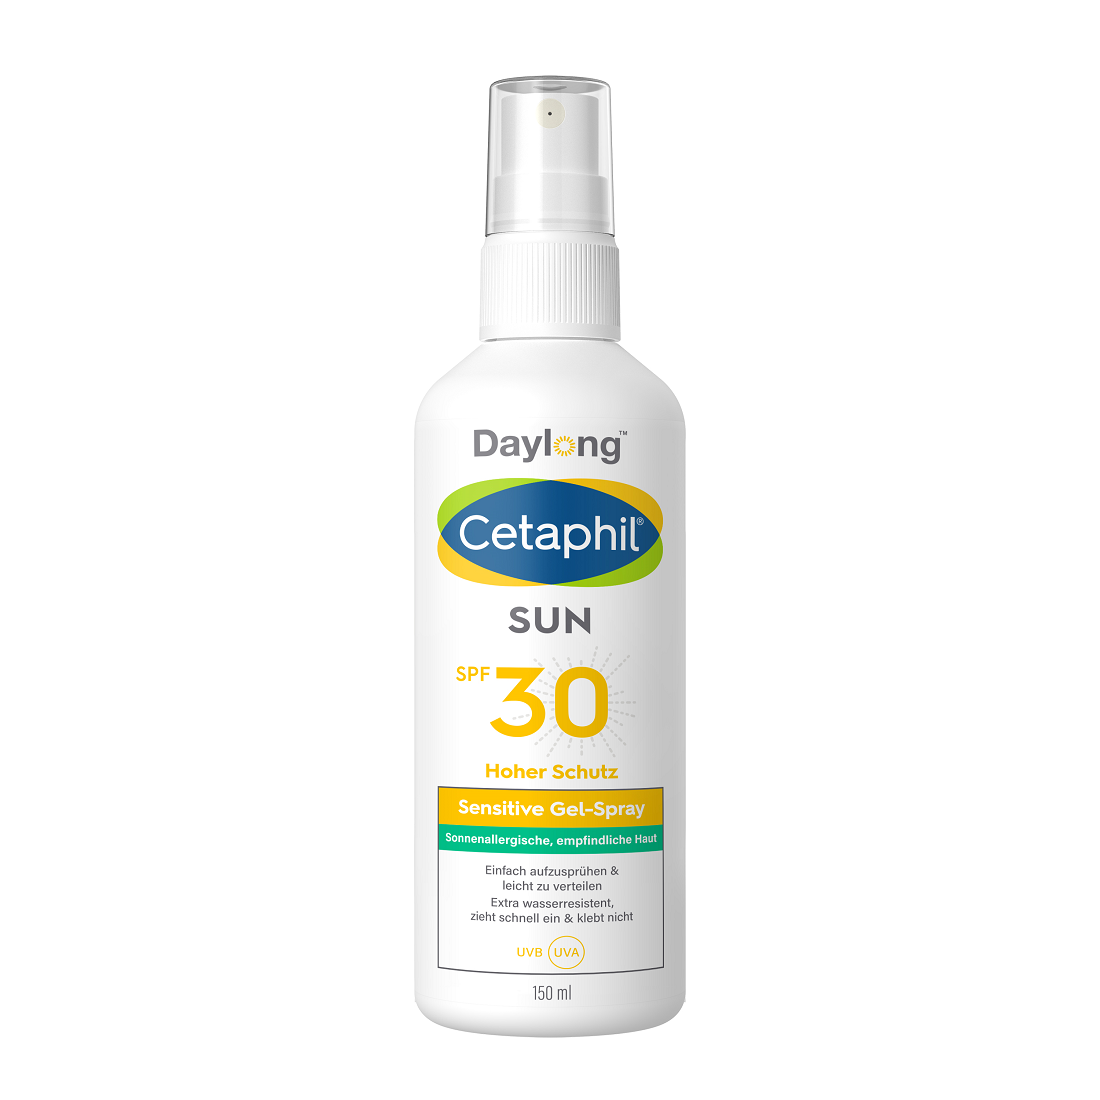 Daylong Cetaphil Sun Sensitive SPF 30